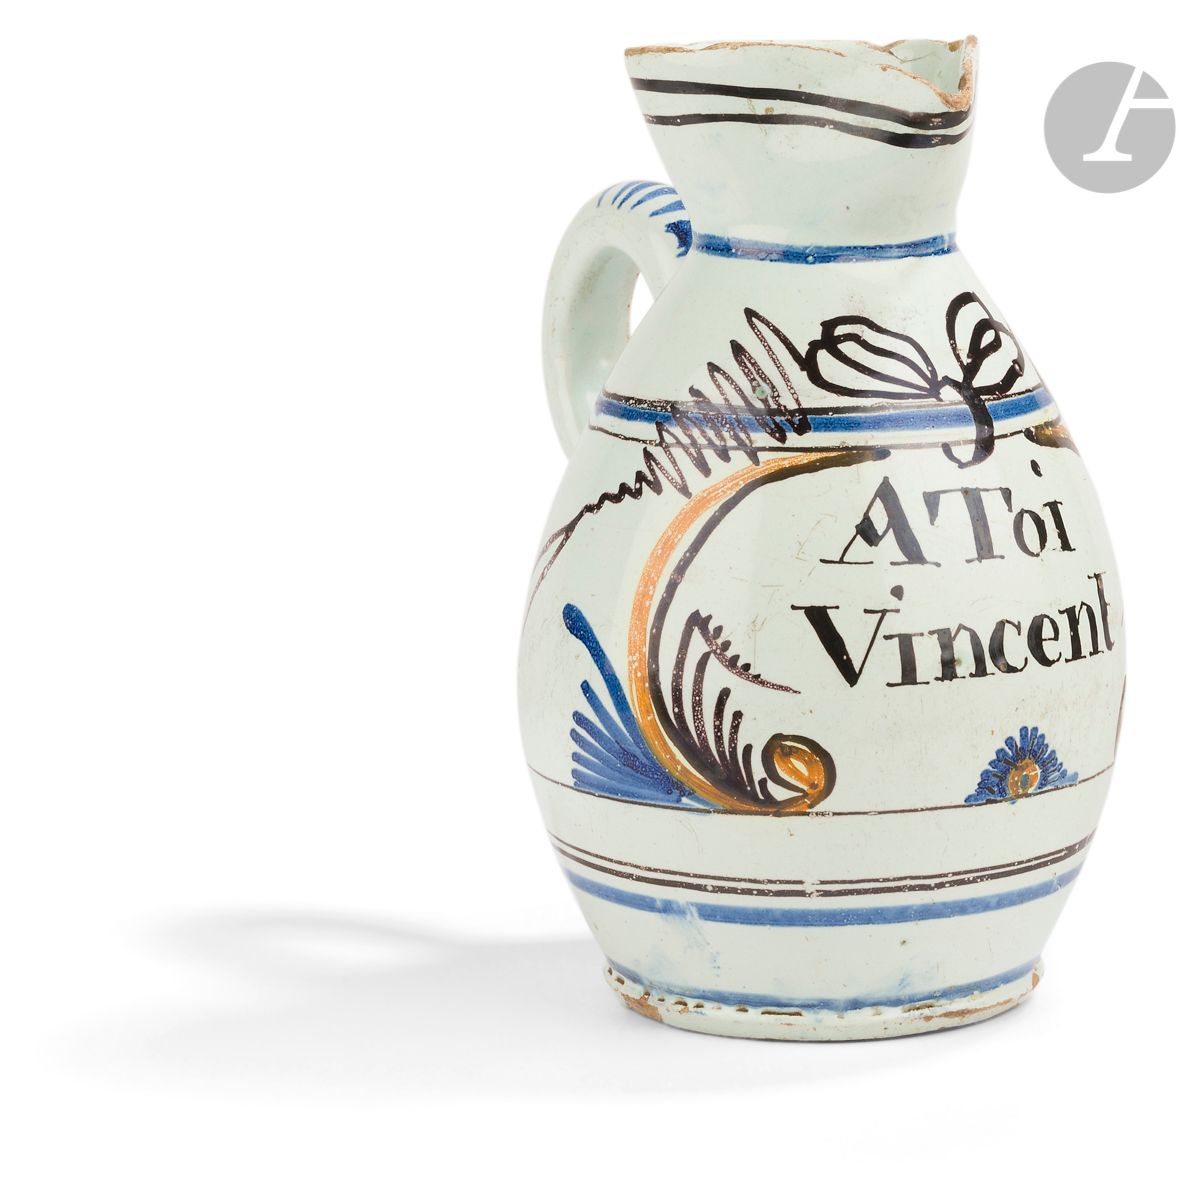 Null 辛辛那提
陶罐，有多色装饰的铭文A Toi Vincent，在一个拱门中。
19世纪。 
高：21厘米